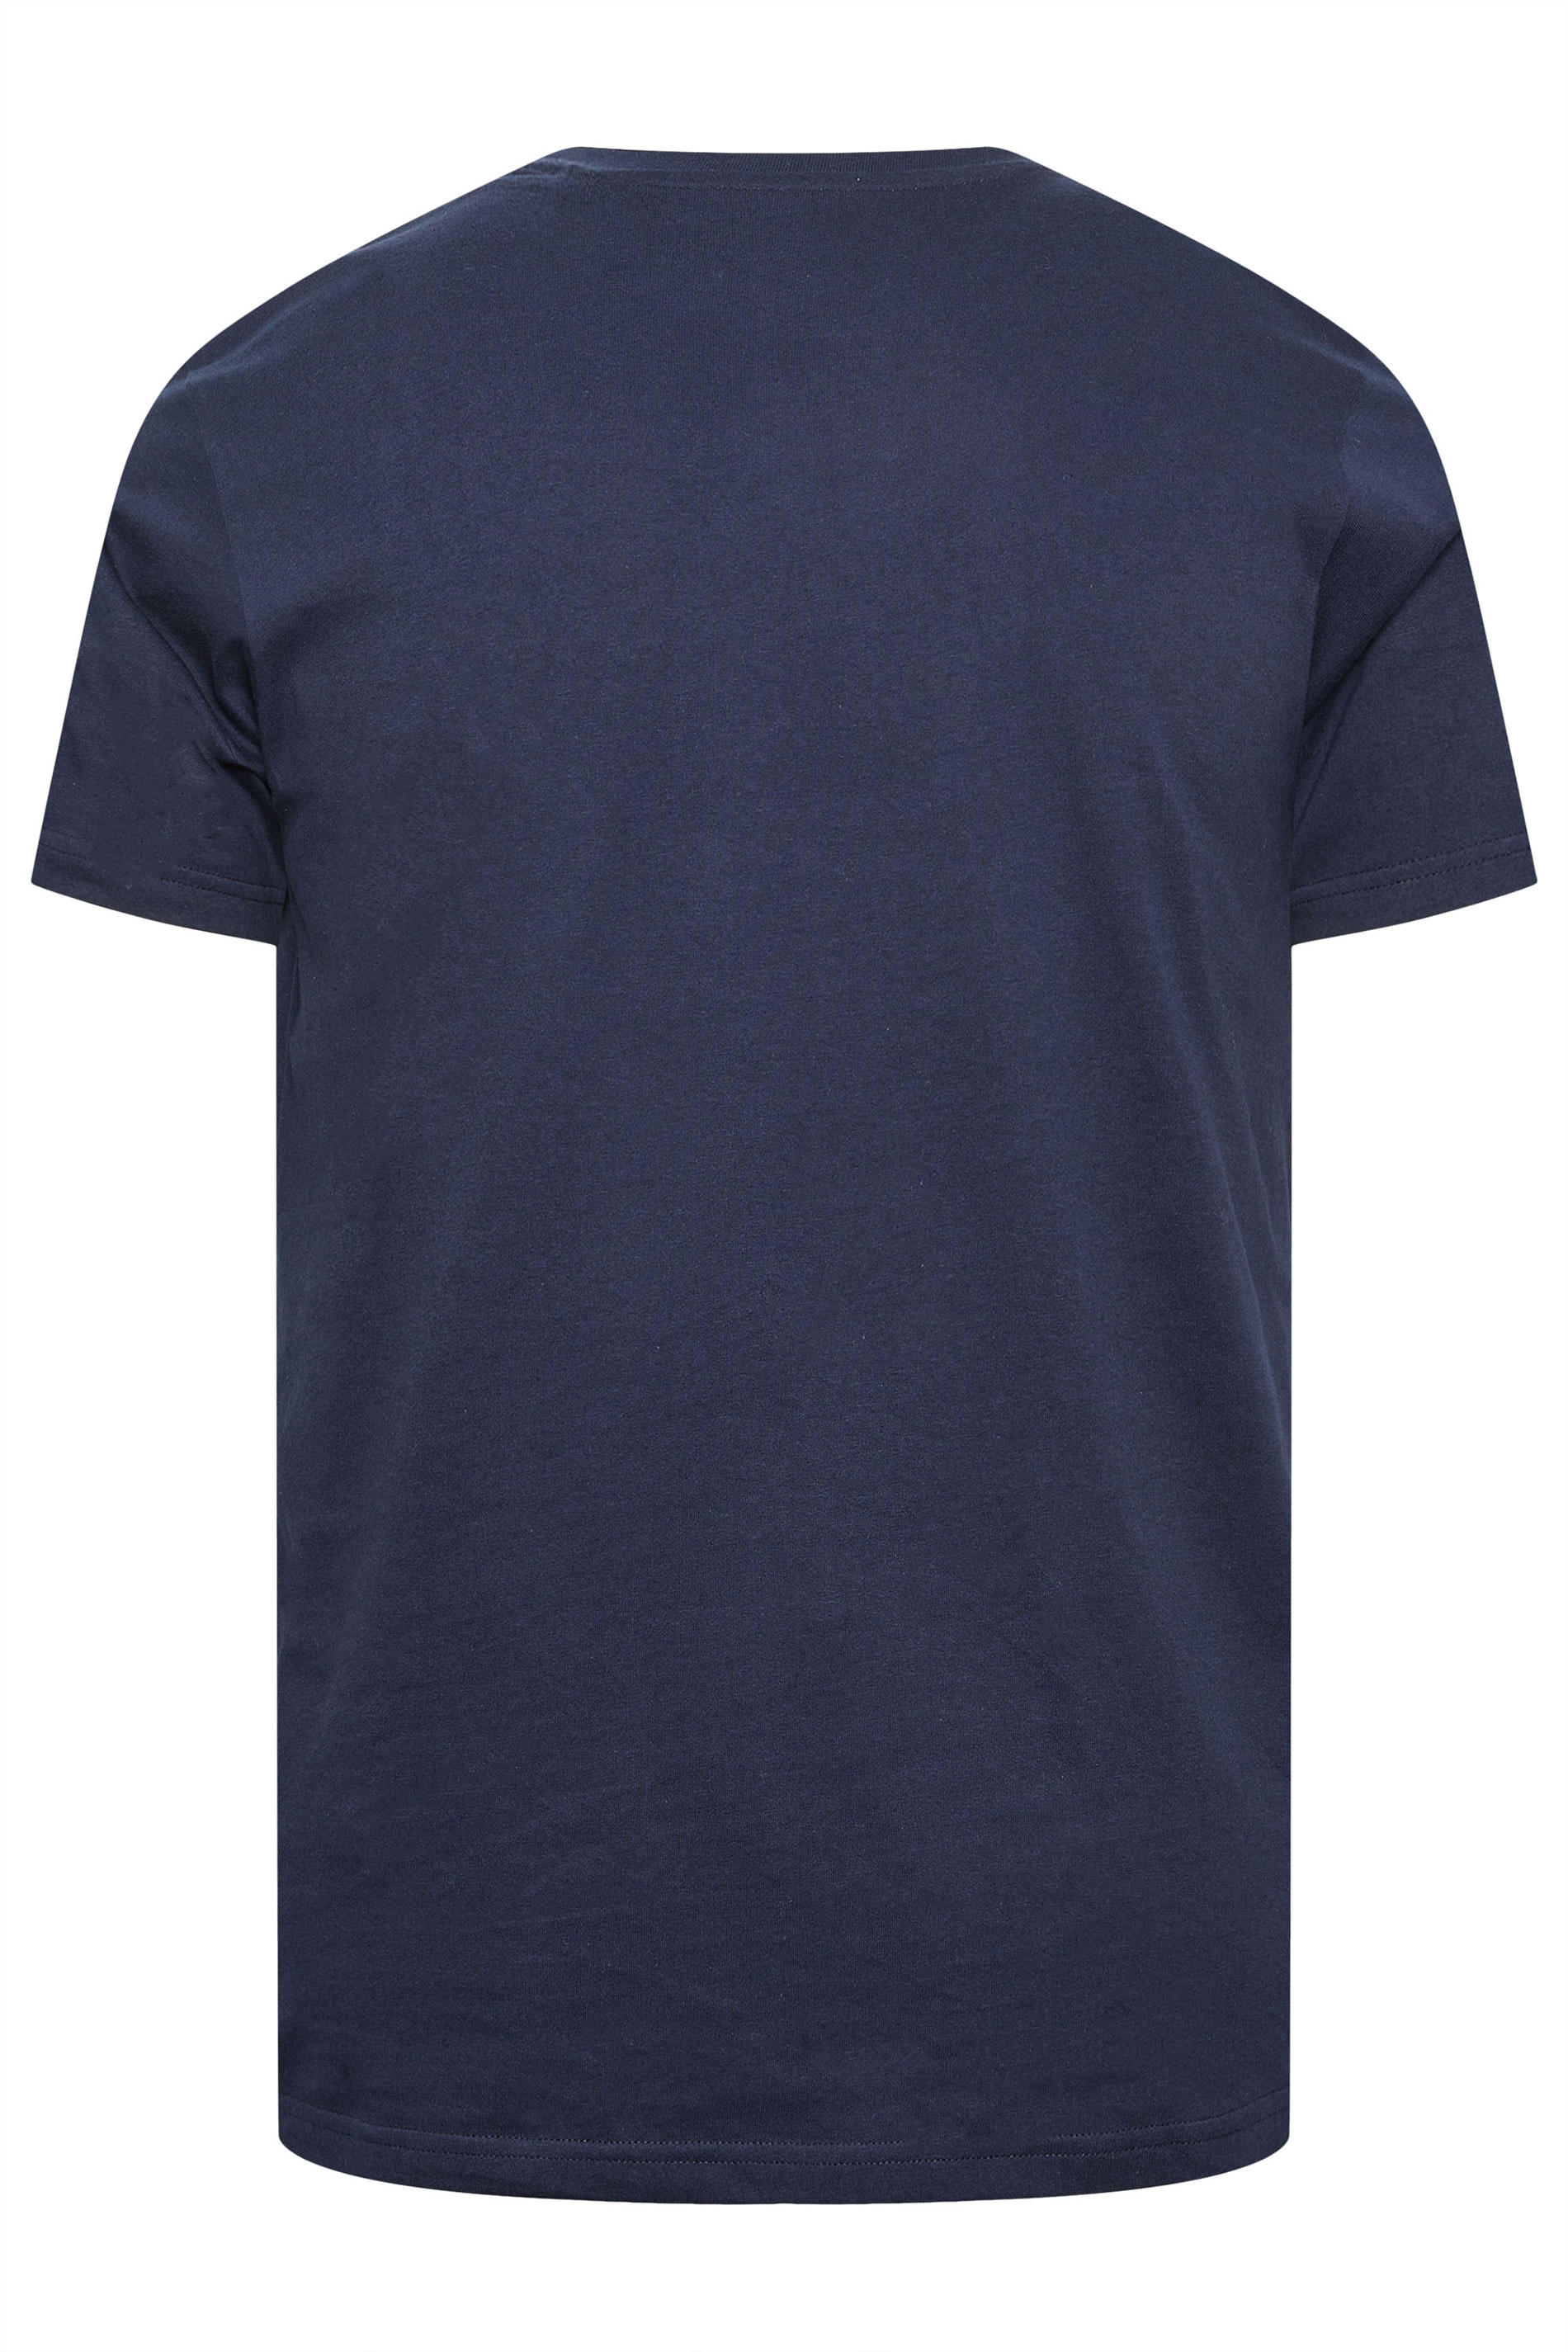 BadRhino Big & Tall Navy Blue Car Print T-Shirt | BadRhino 3